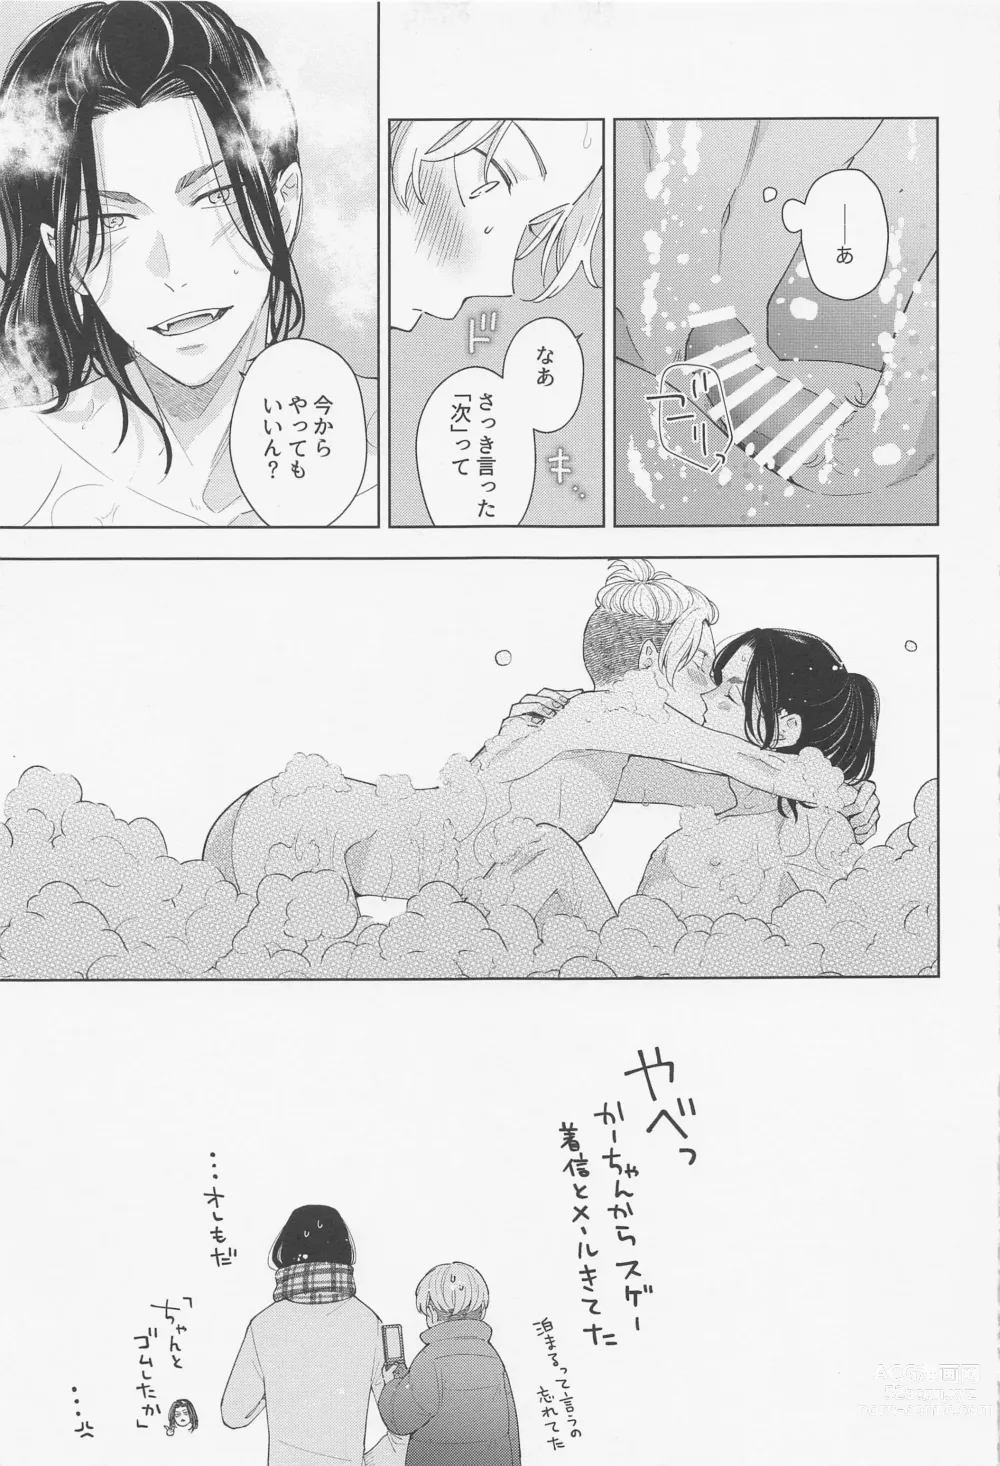 Page 64 of doujinshi Hopeless Romantic